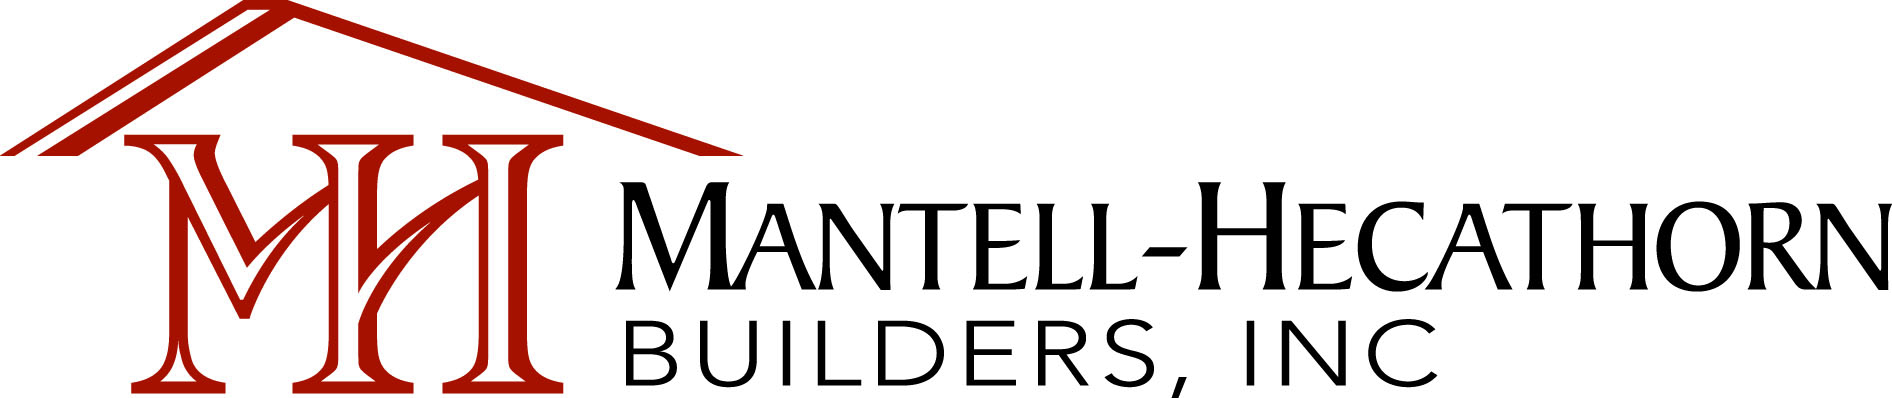 Mantell-Hecathorn Builders Inc. company logo